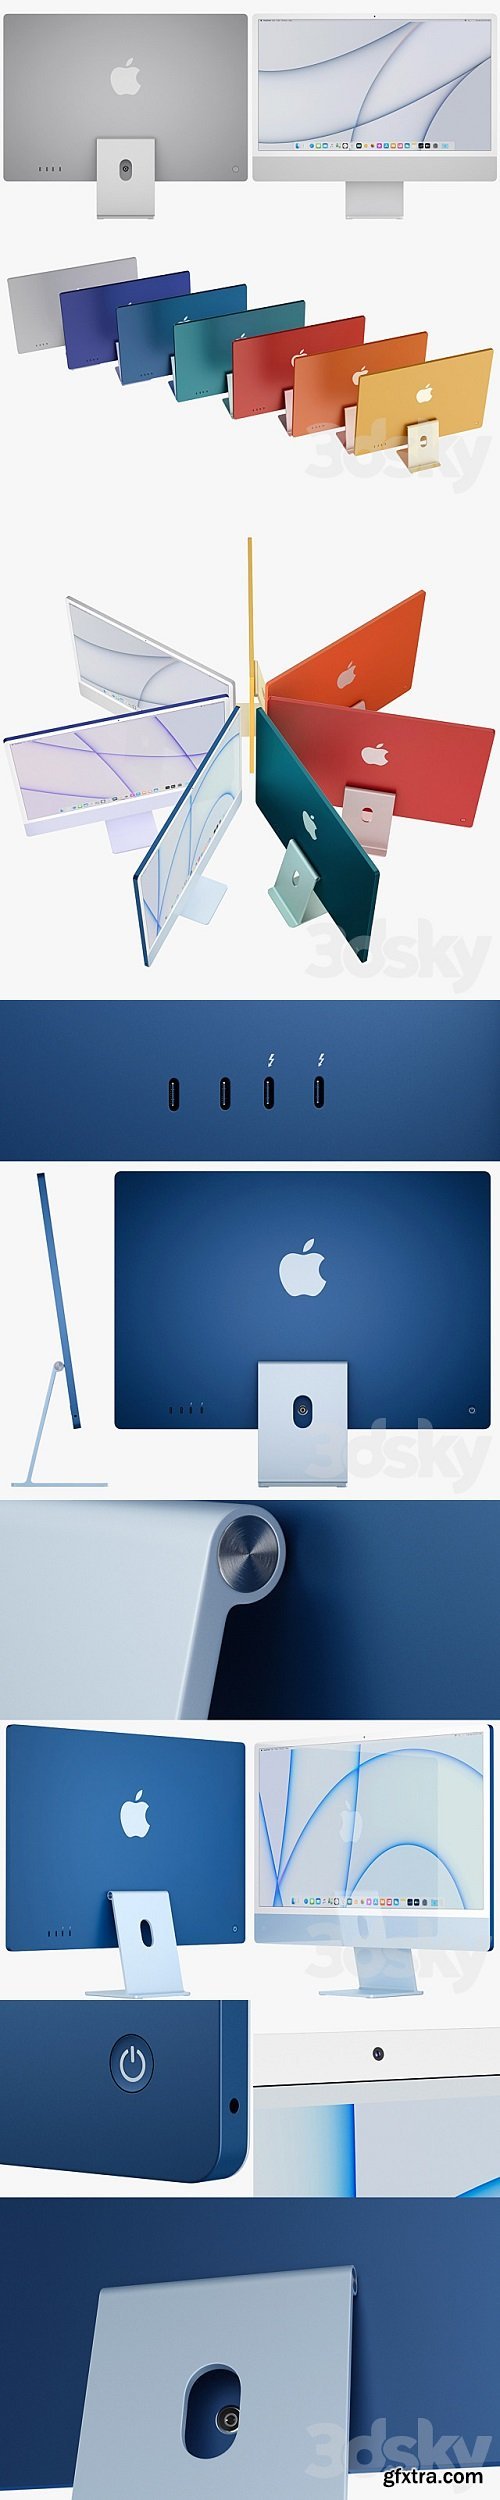 Pro 3DSky - Apple iMac 24-inch all colors 2021